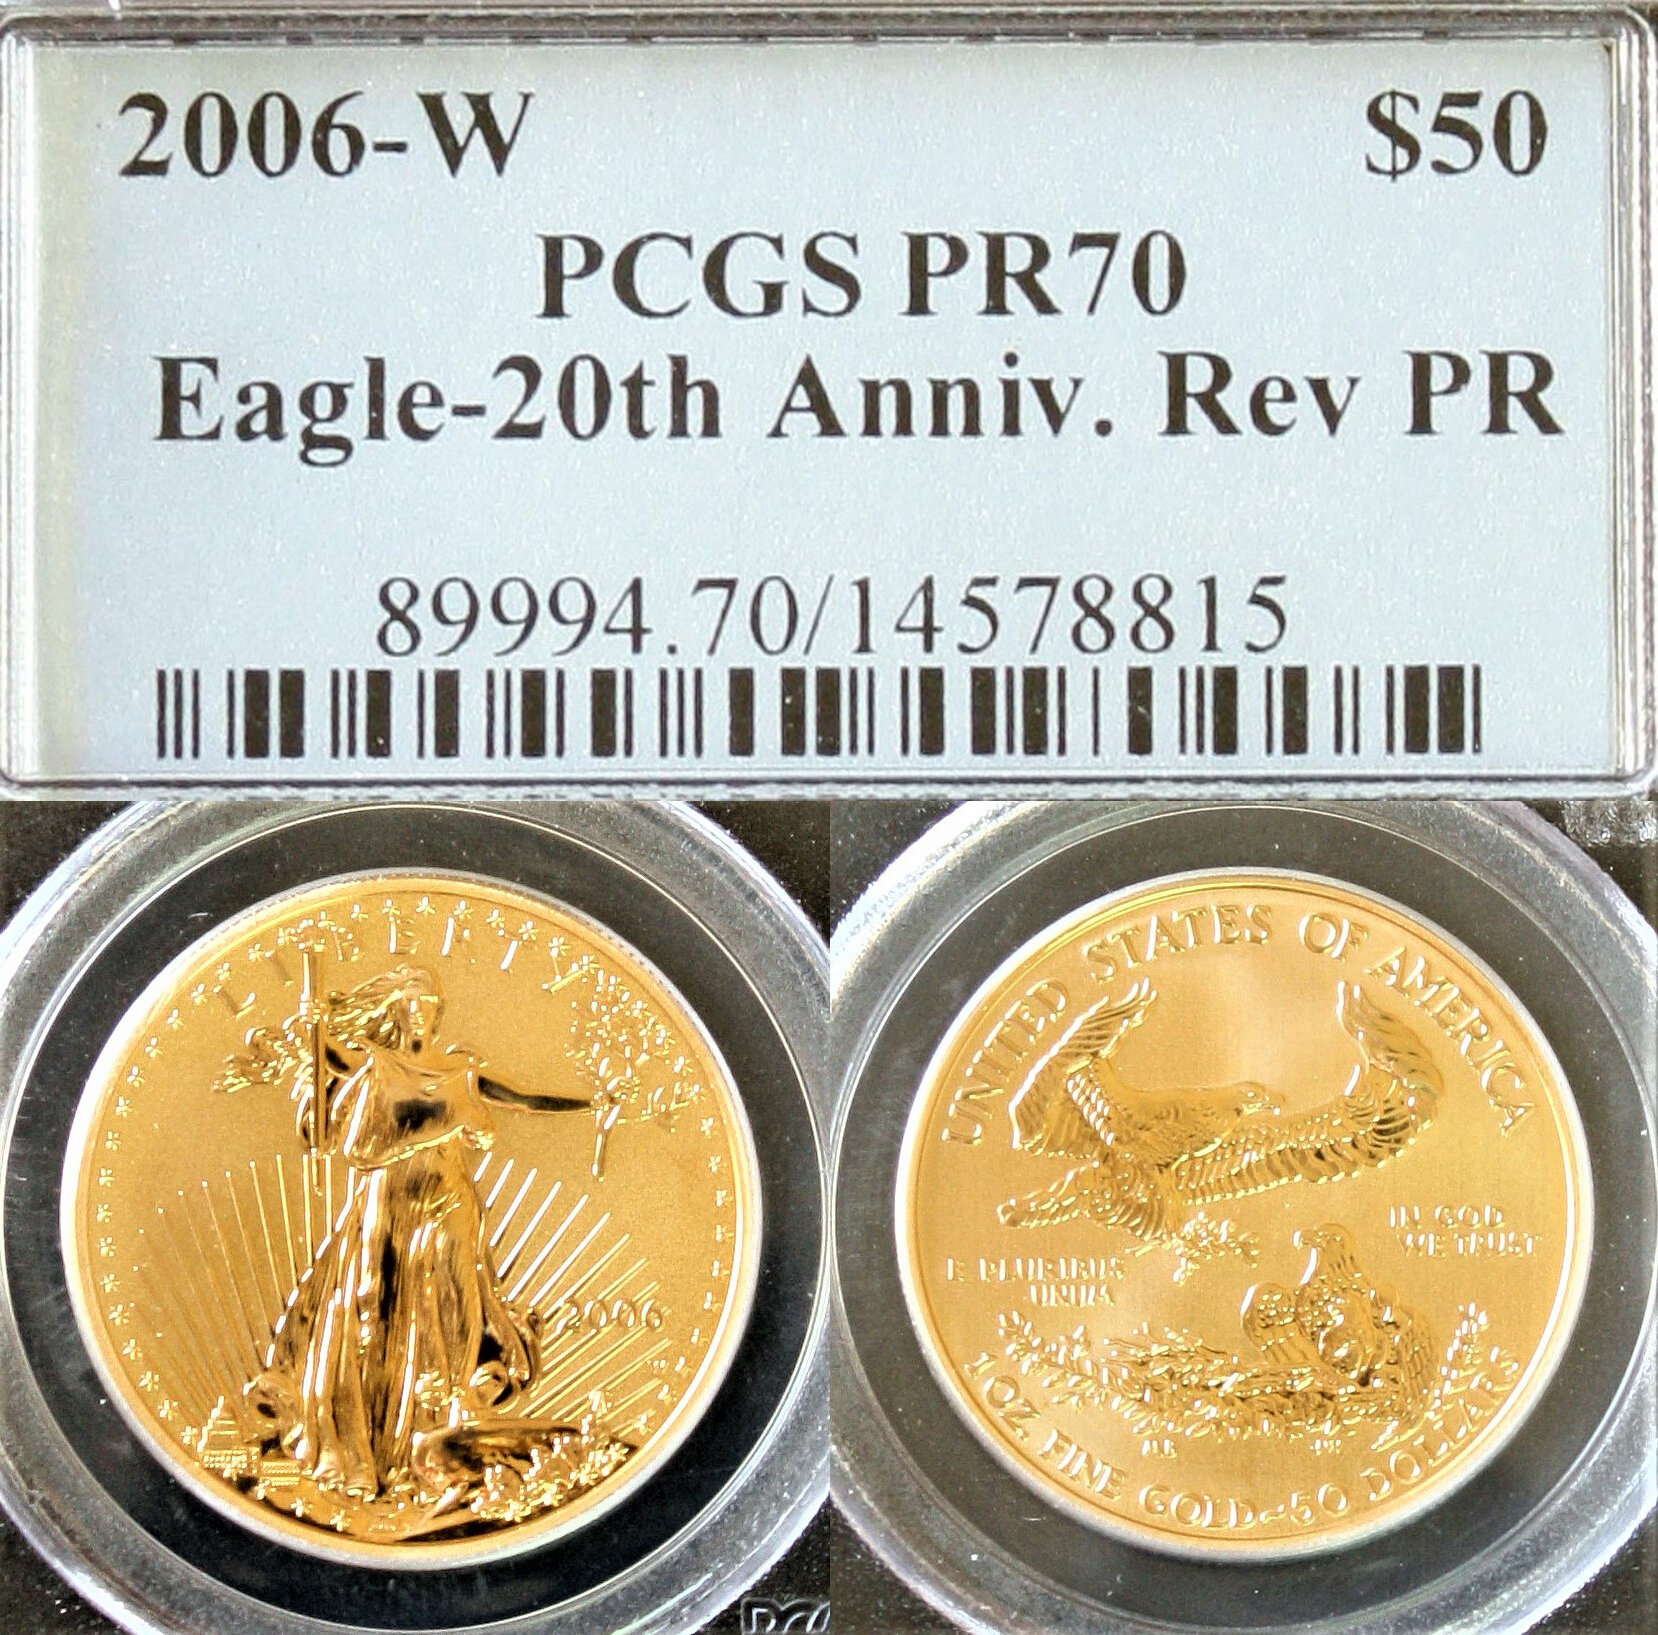 2006-W $50 Rev. PR70.jpg